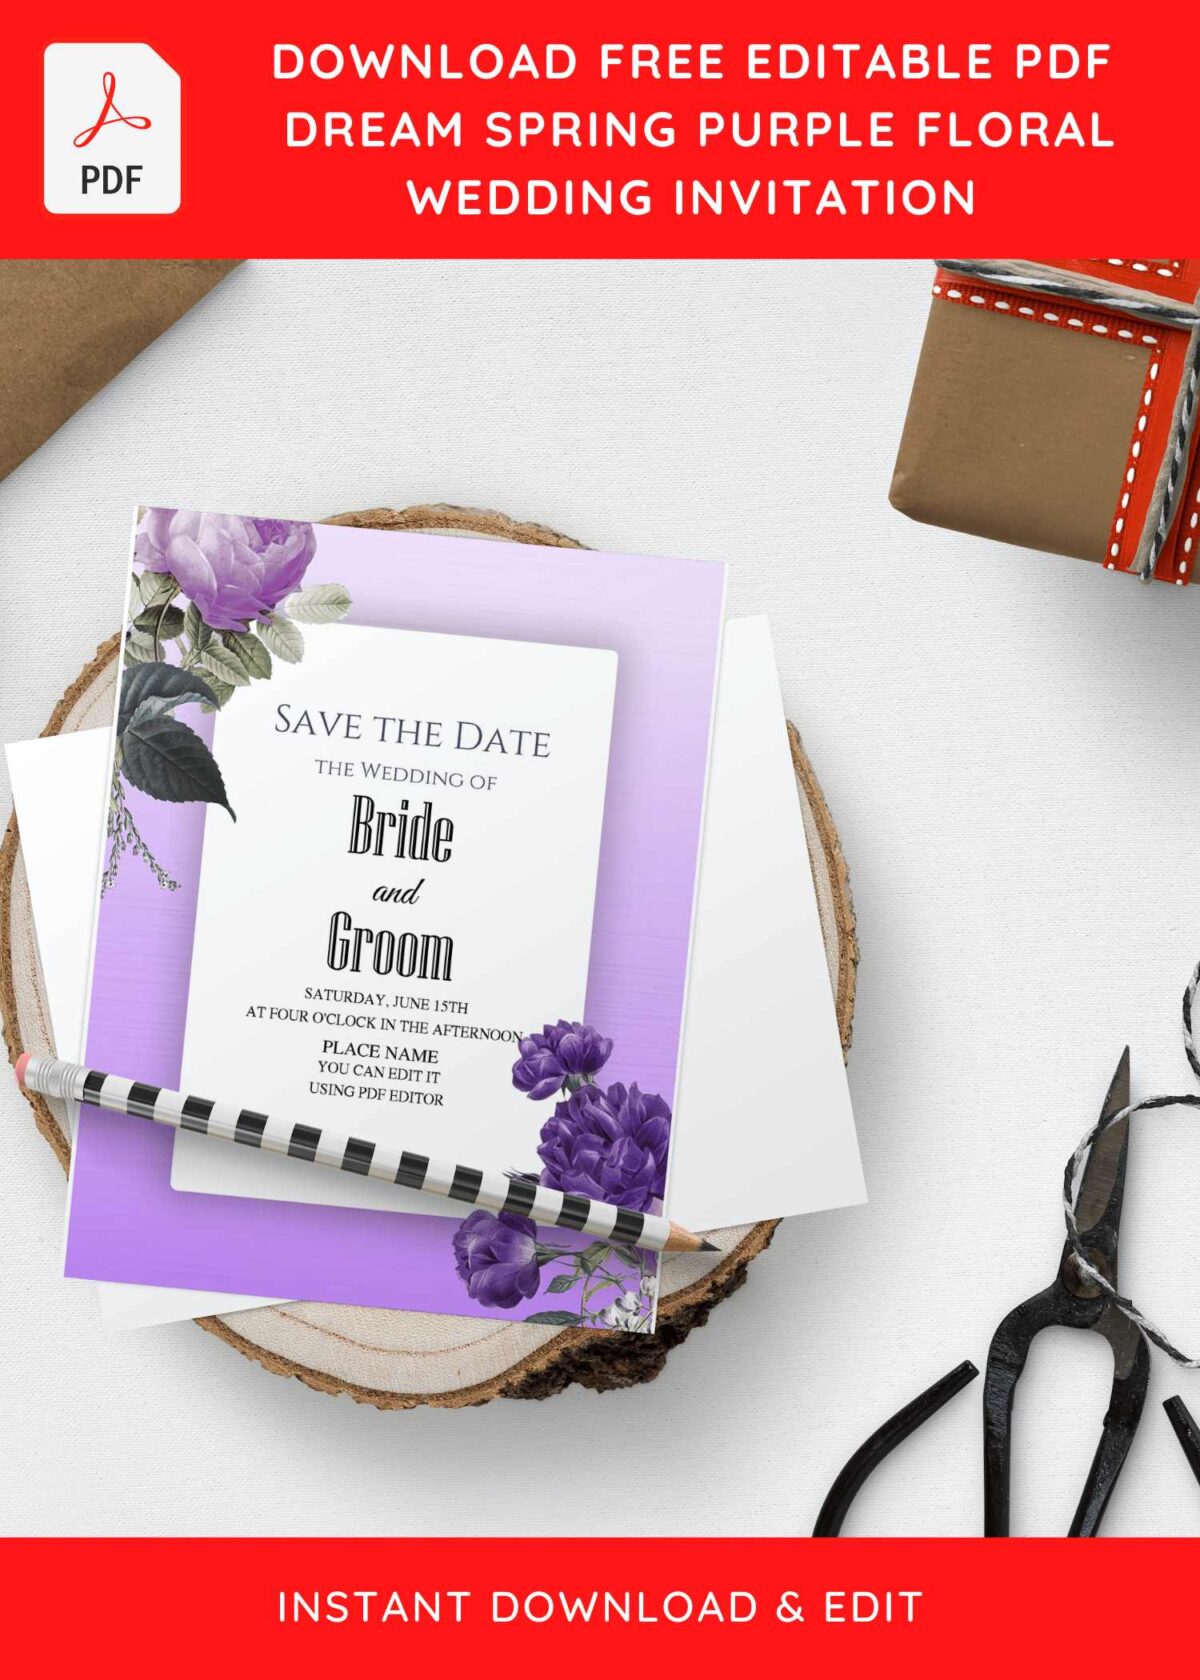 (Free Editable PDF) Dreamy Purple Flowers Wedding Invitation Templates with watercolor leaf